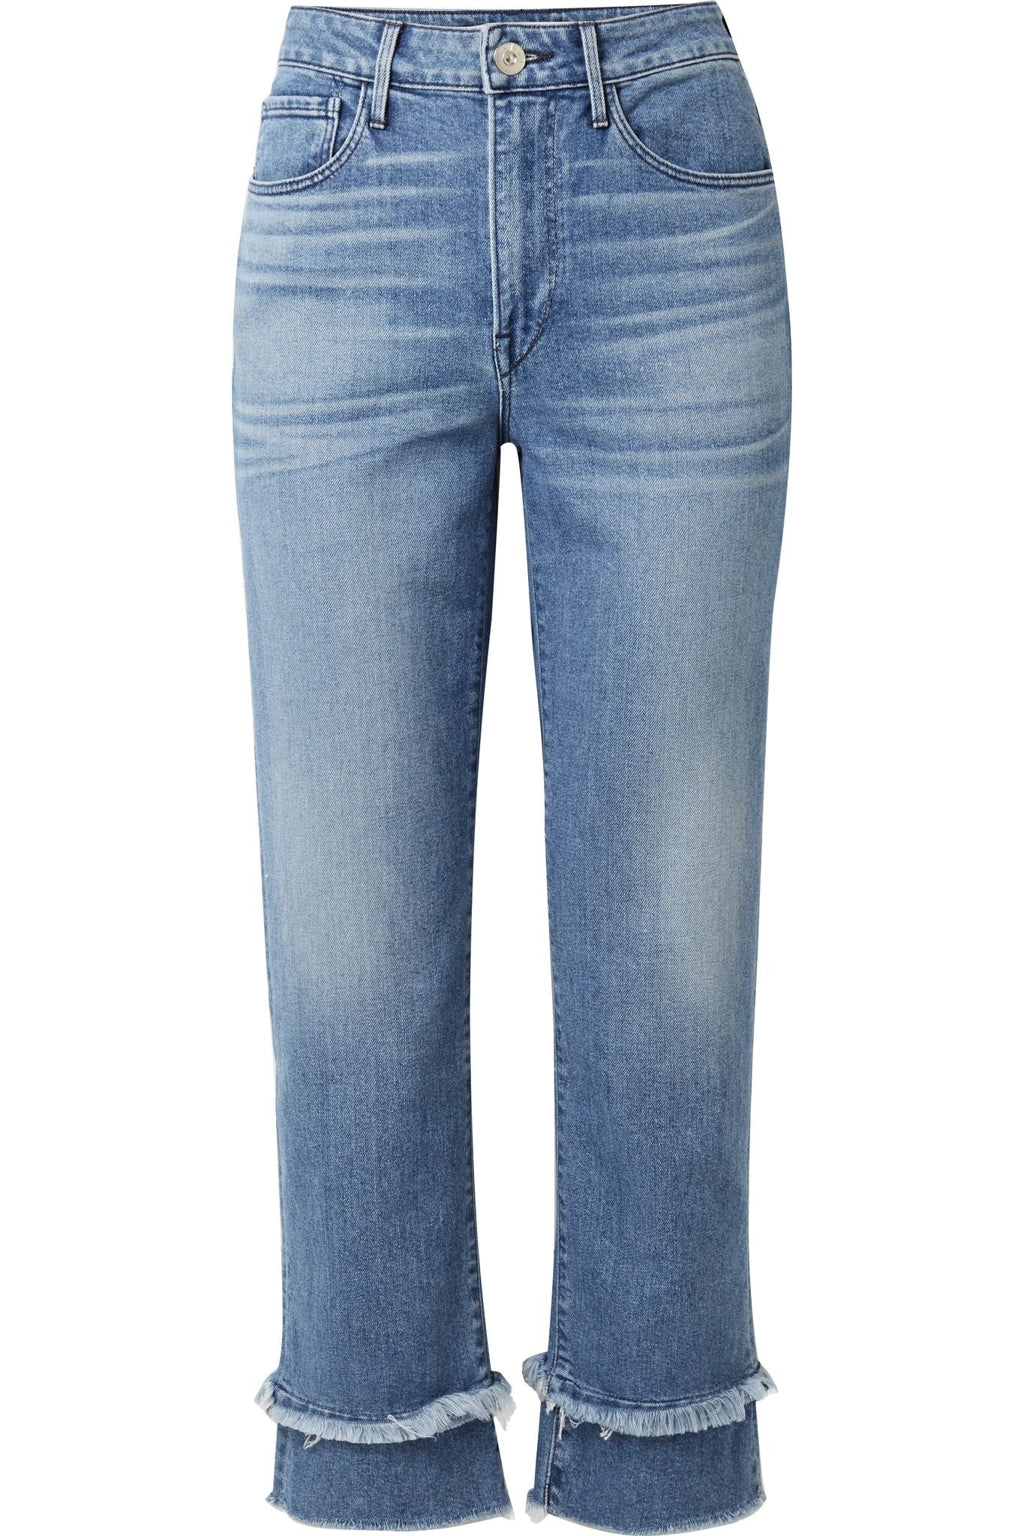 ‘Petal’ Frayed High-Rise Jeans